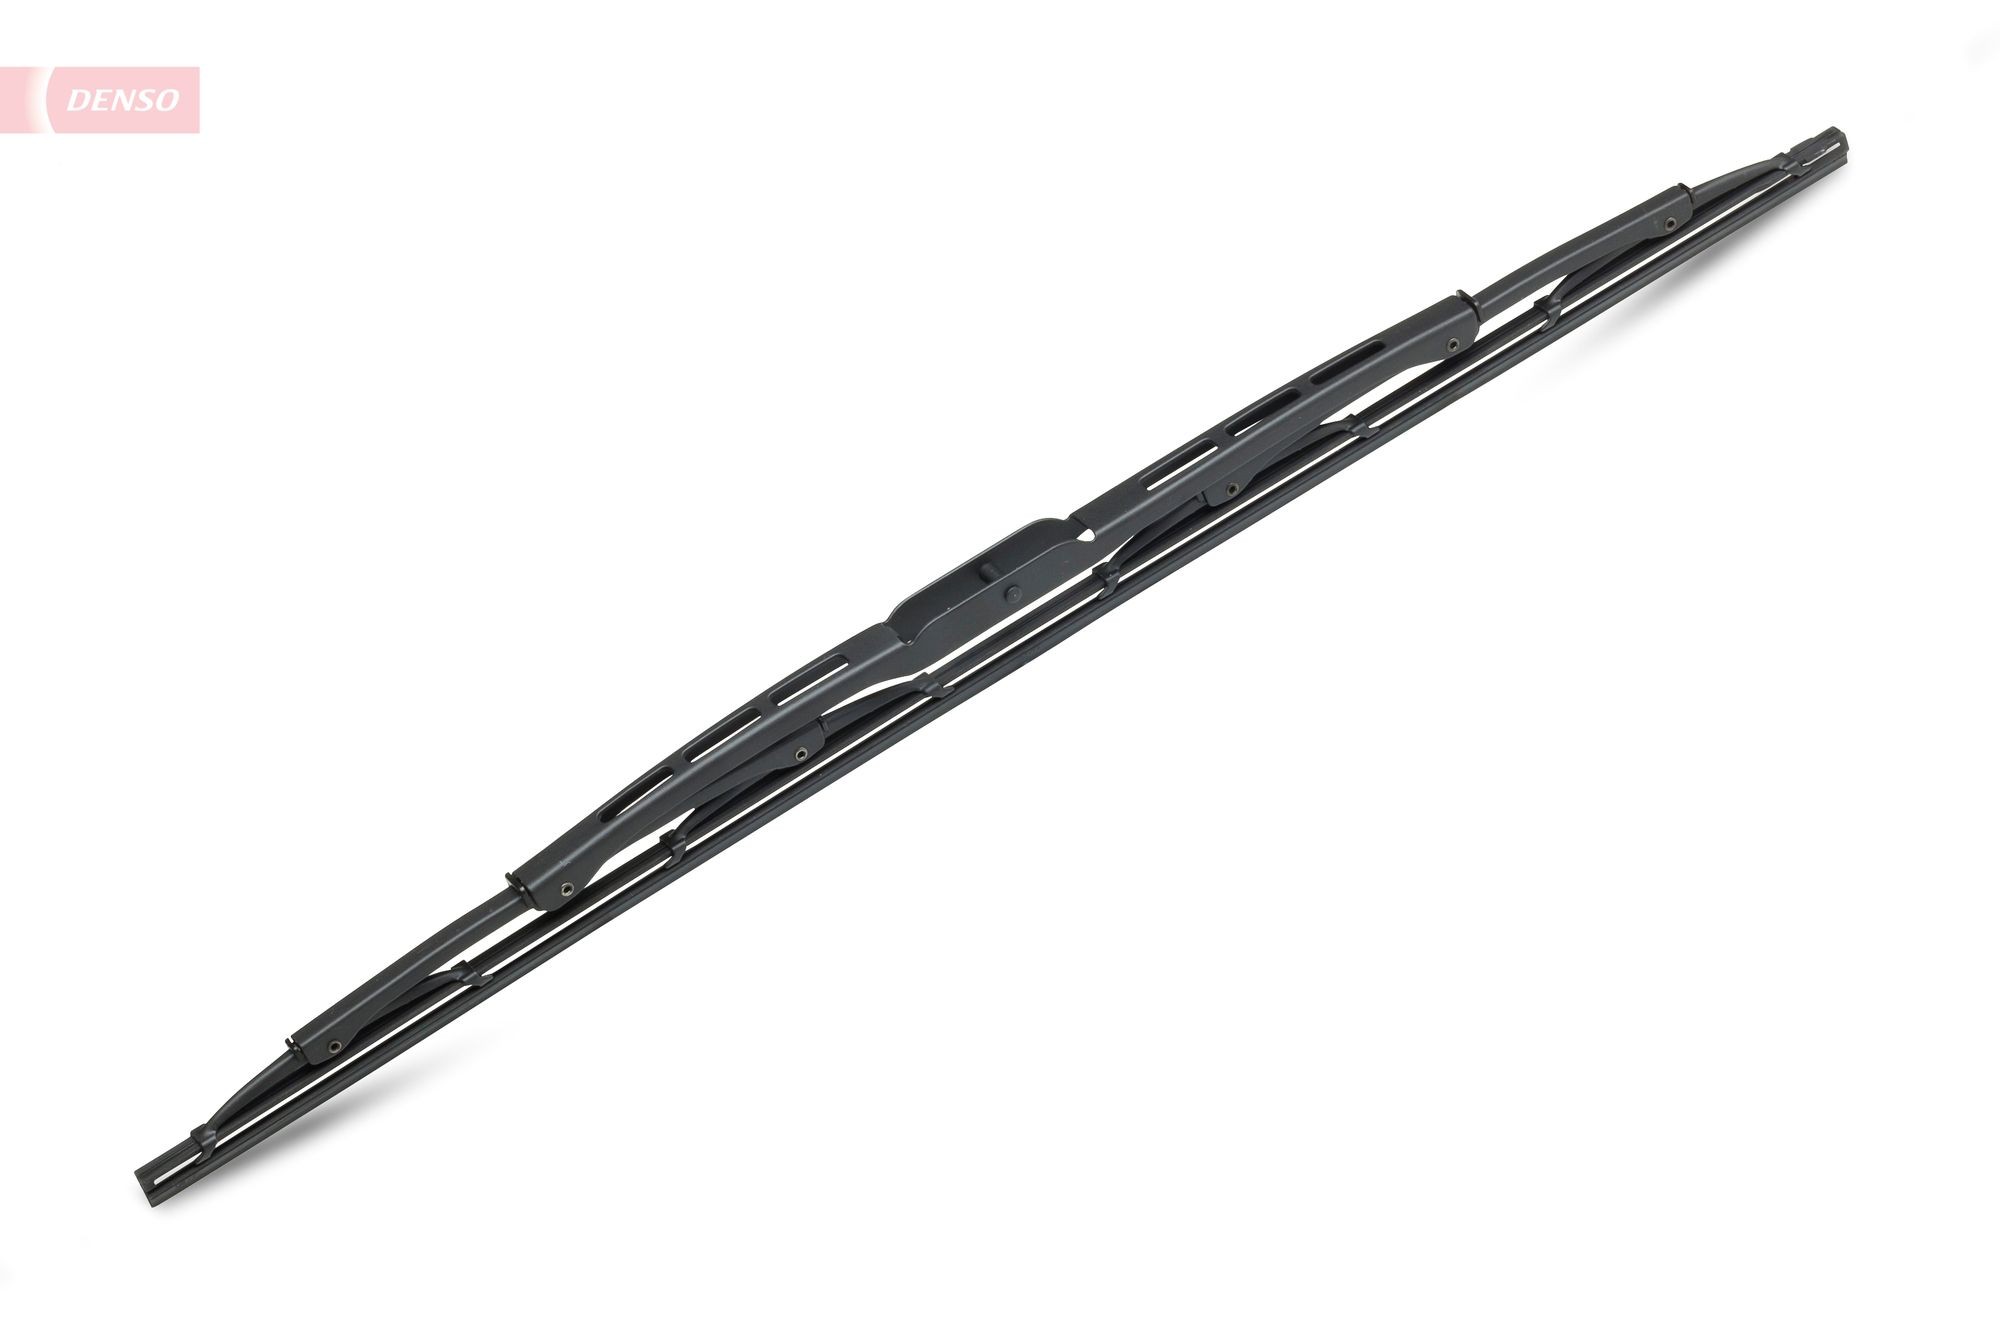 DM-050 DENSO Windscreen wipers VOLVO 500 mm, Standard, 20 Inch